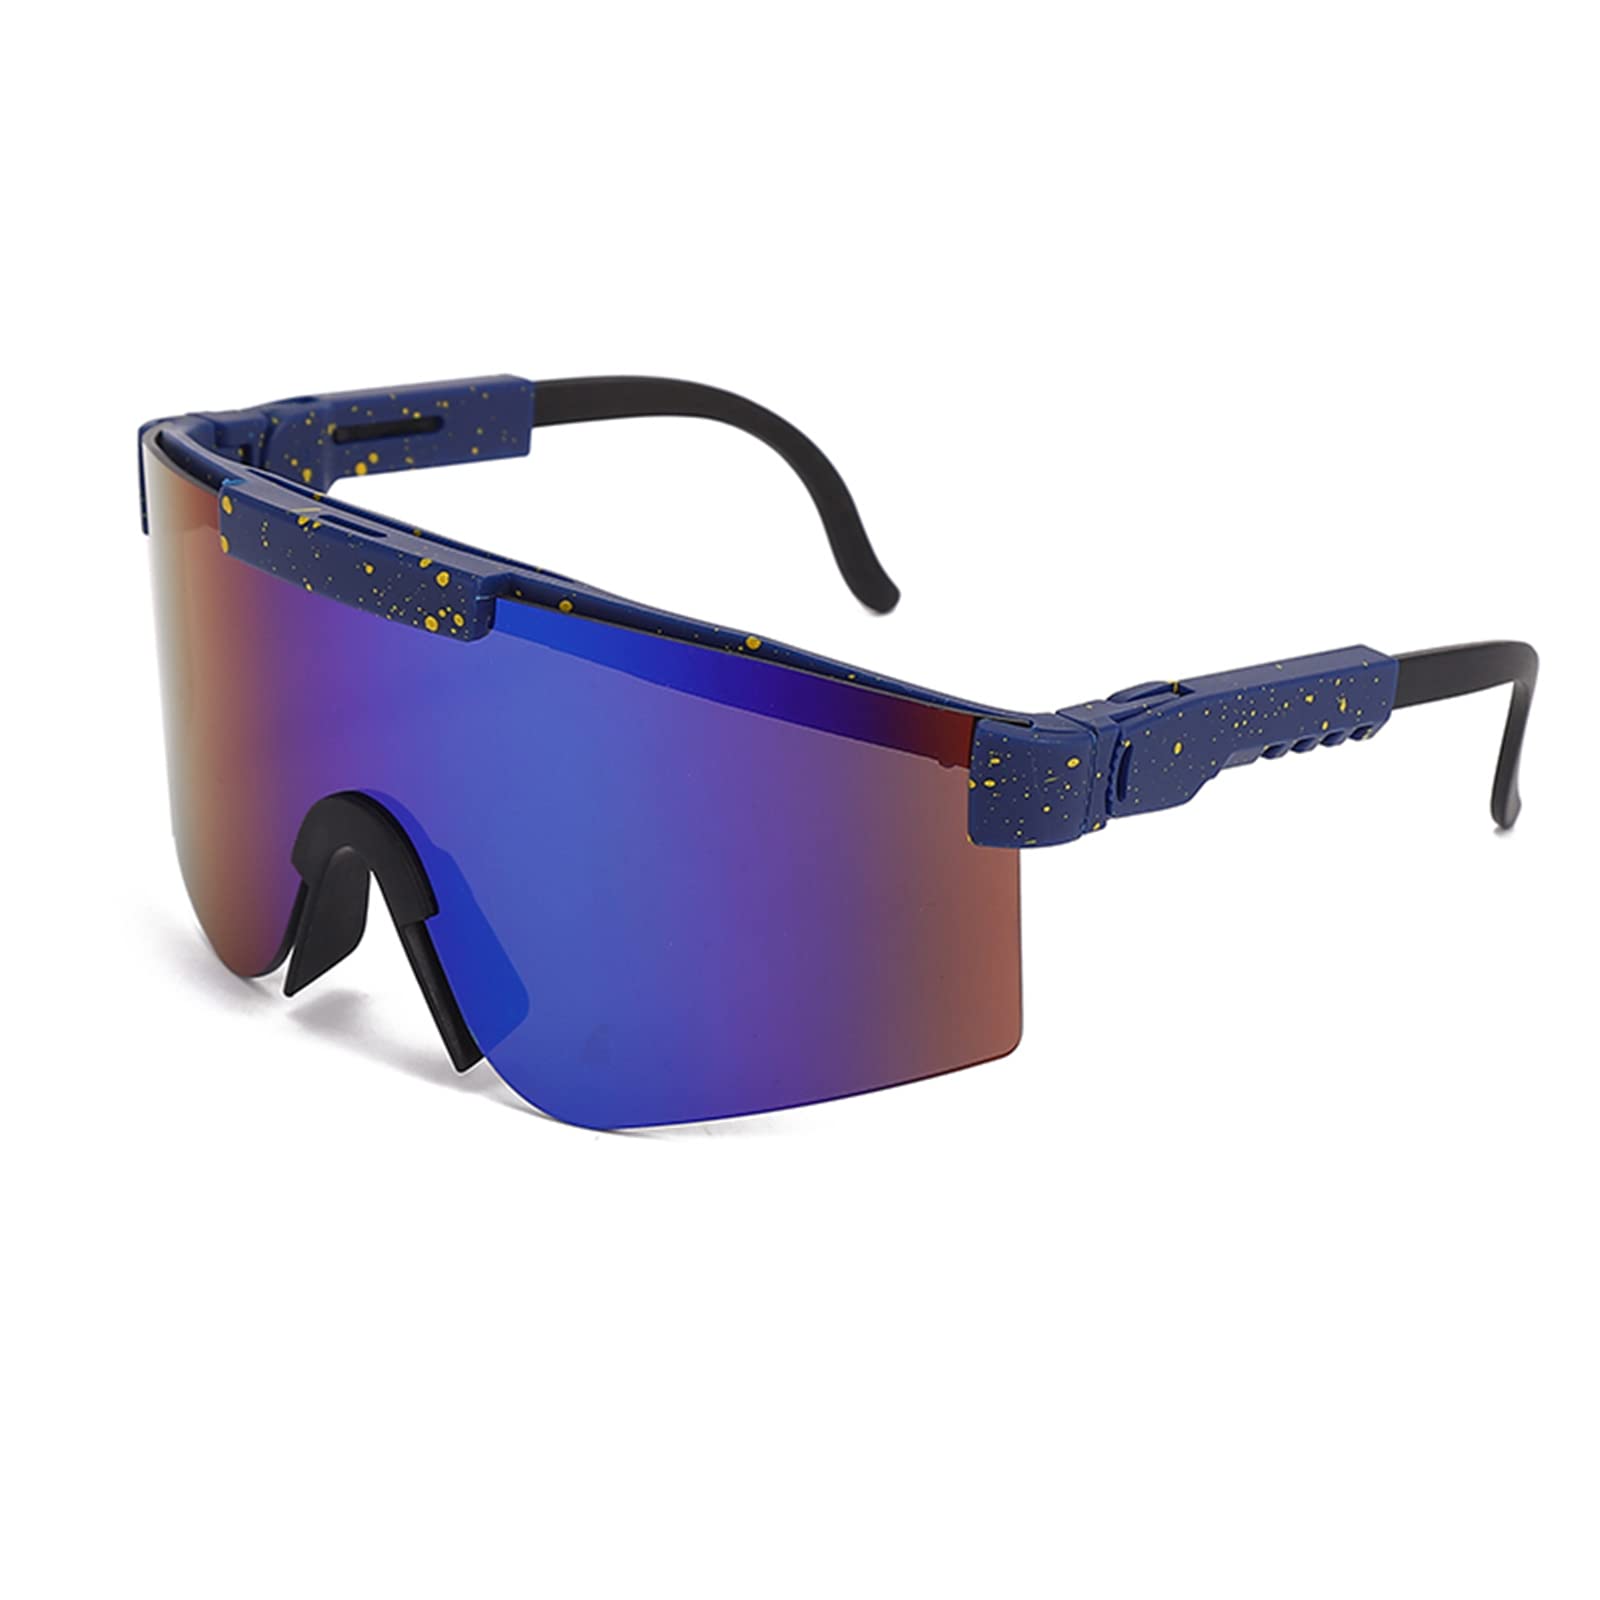 Hzpohyz Sport Sunglasses, Polarized Sunglasses, UV400 Protection